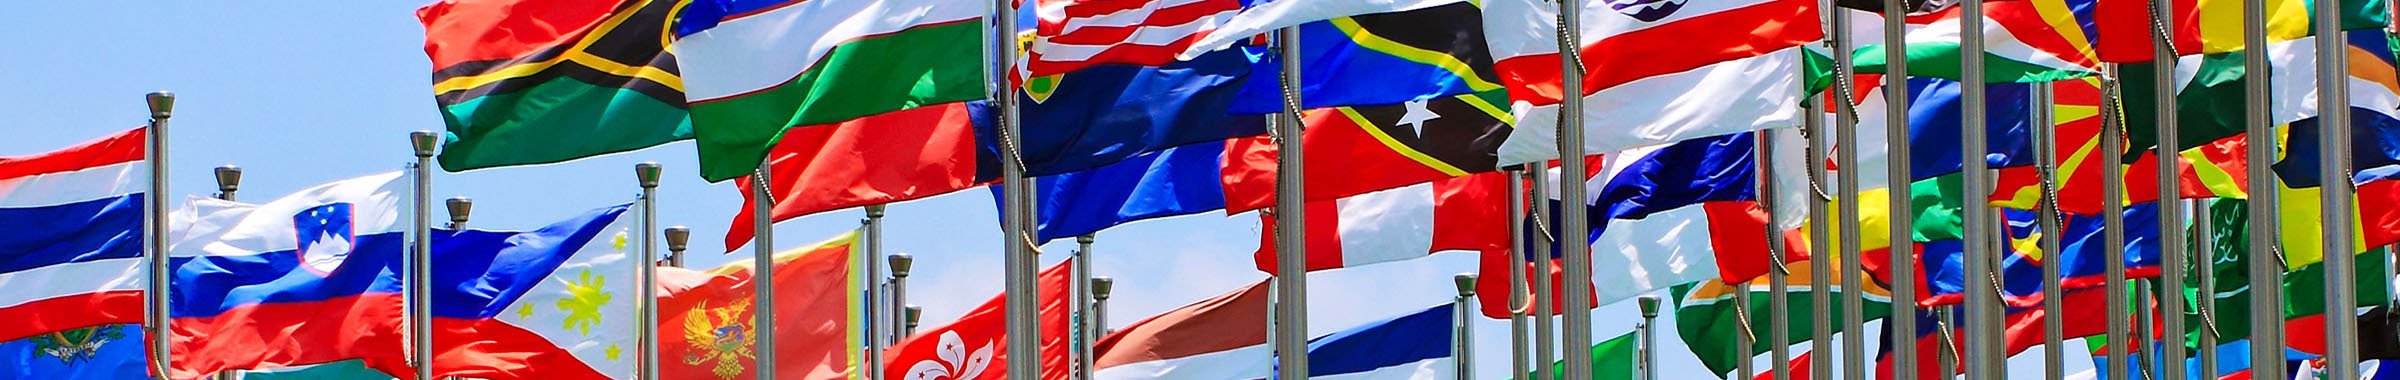 International Flags waving